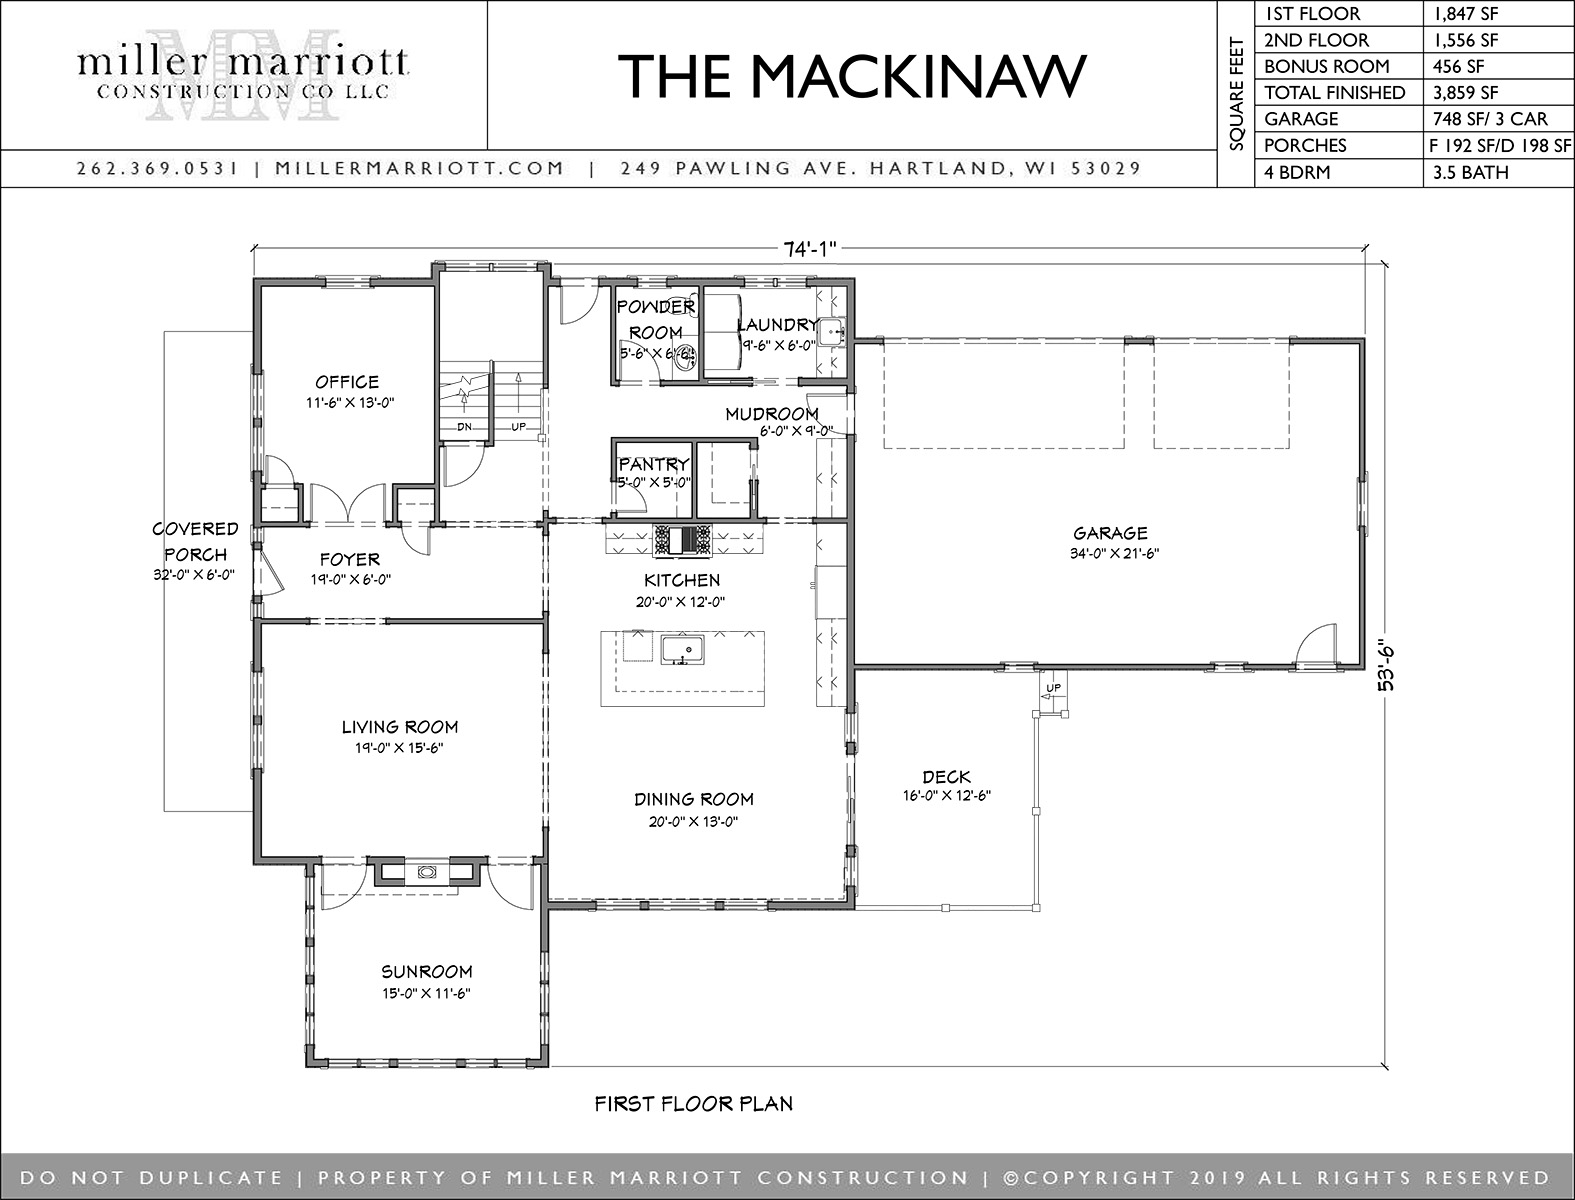 The Mackinaw first floor plan